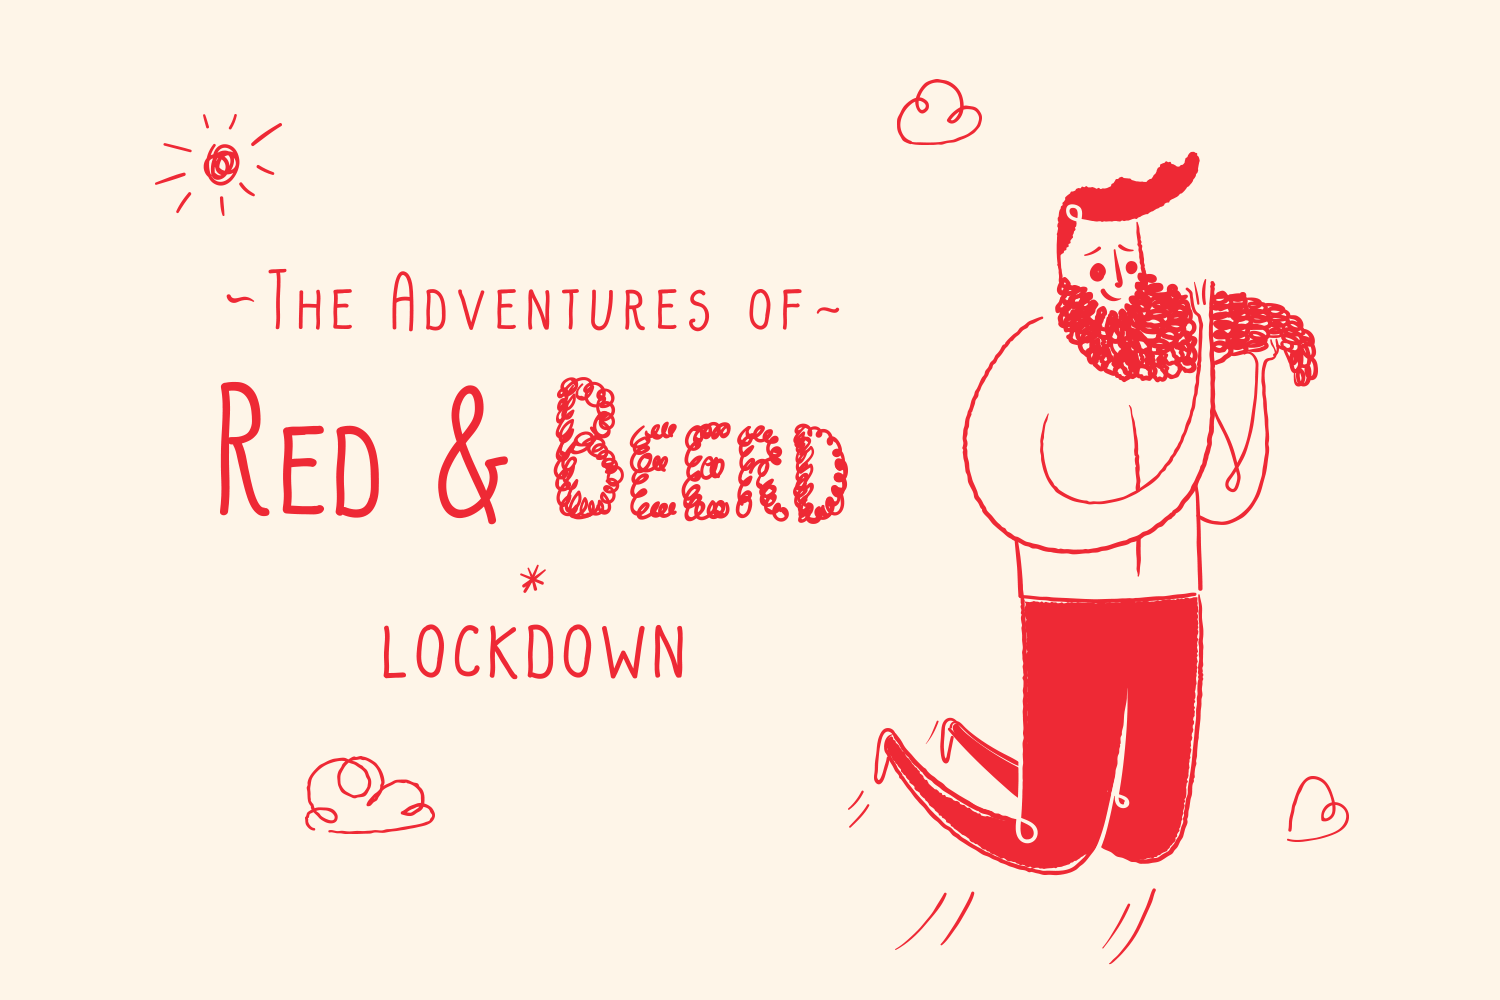 Red & Beerd in Lockdown